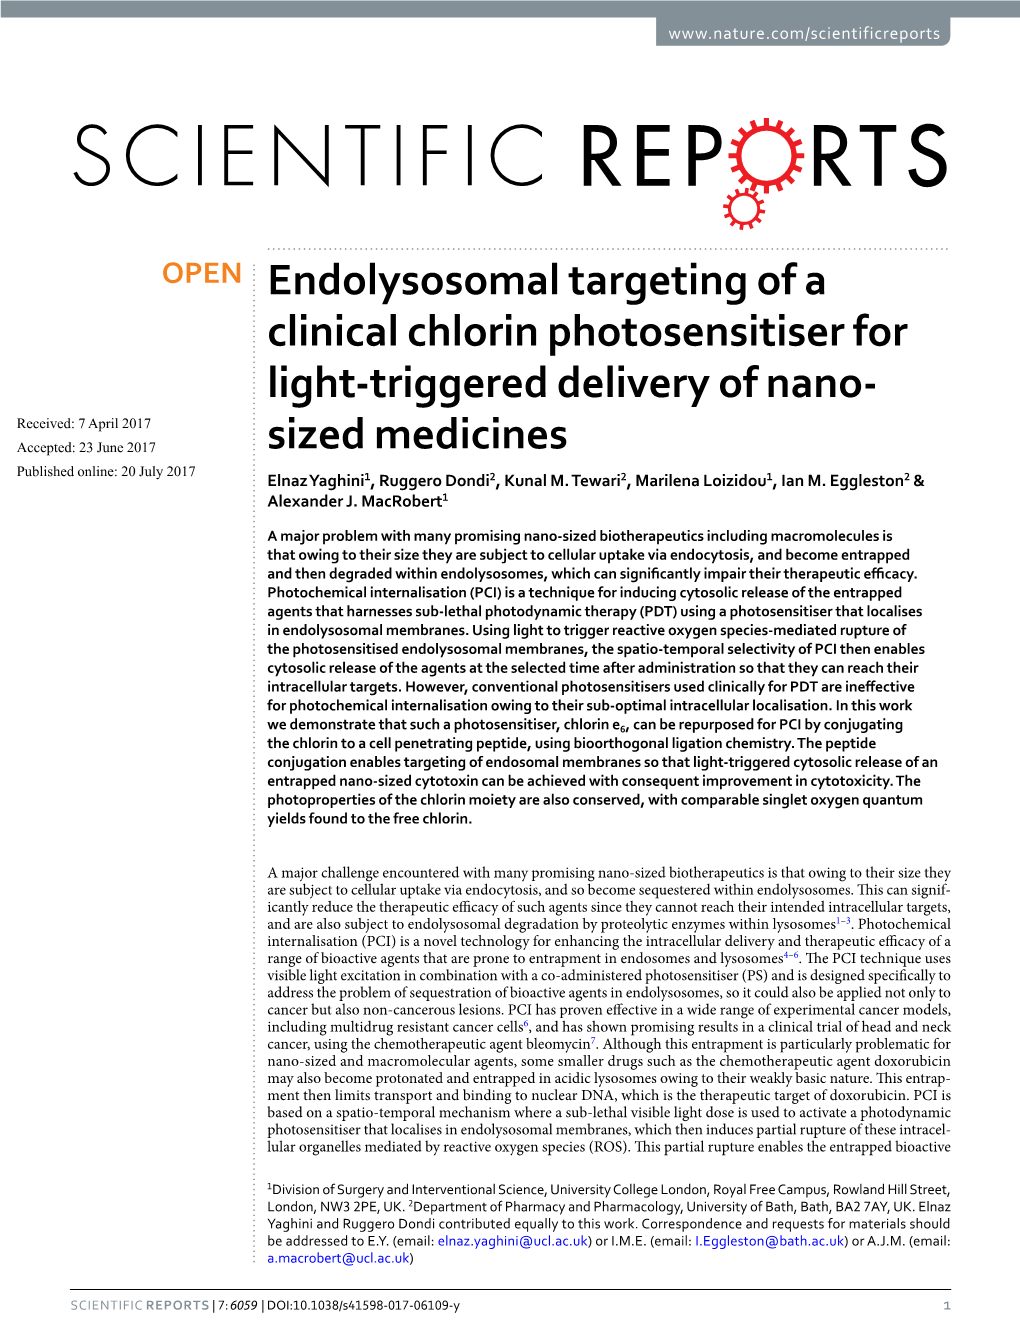 Endolysosomal Targeting of a Clinical Chlorin Photosensitiser for Light